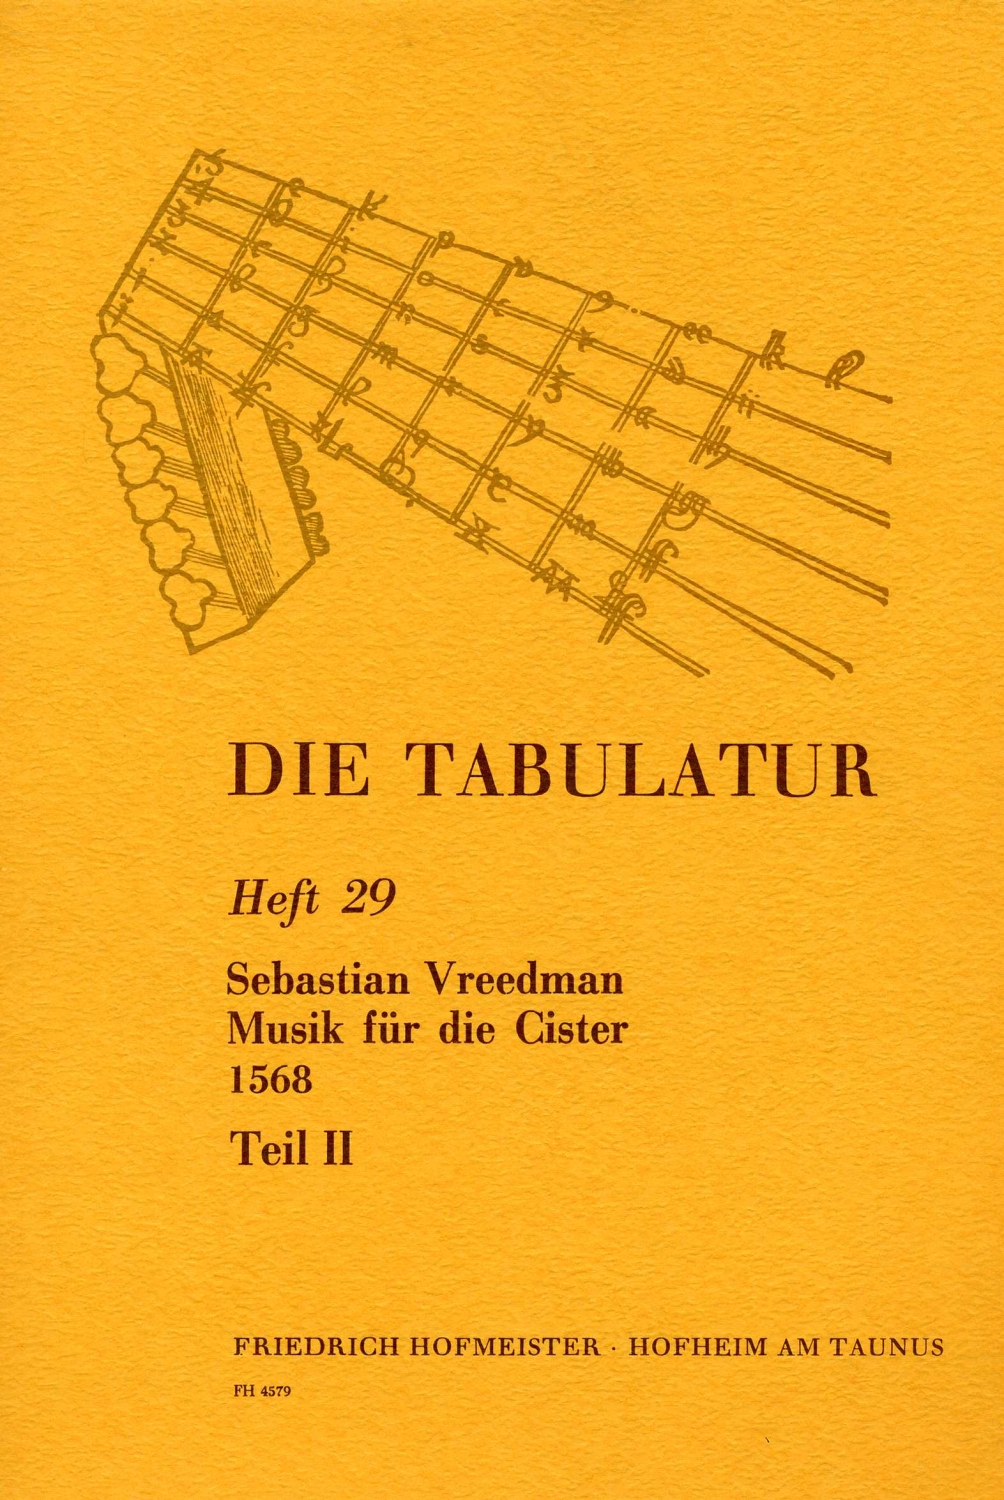 sebastian-vreedman-musik-fuer-die-cister-1568-vol2_0001.JPG